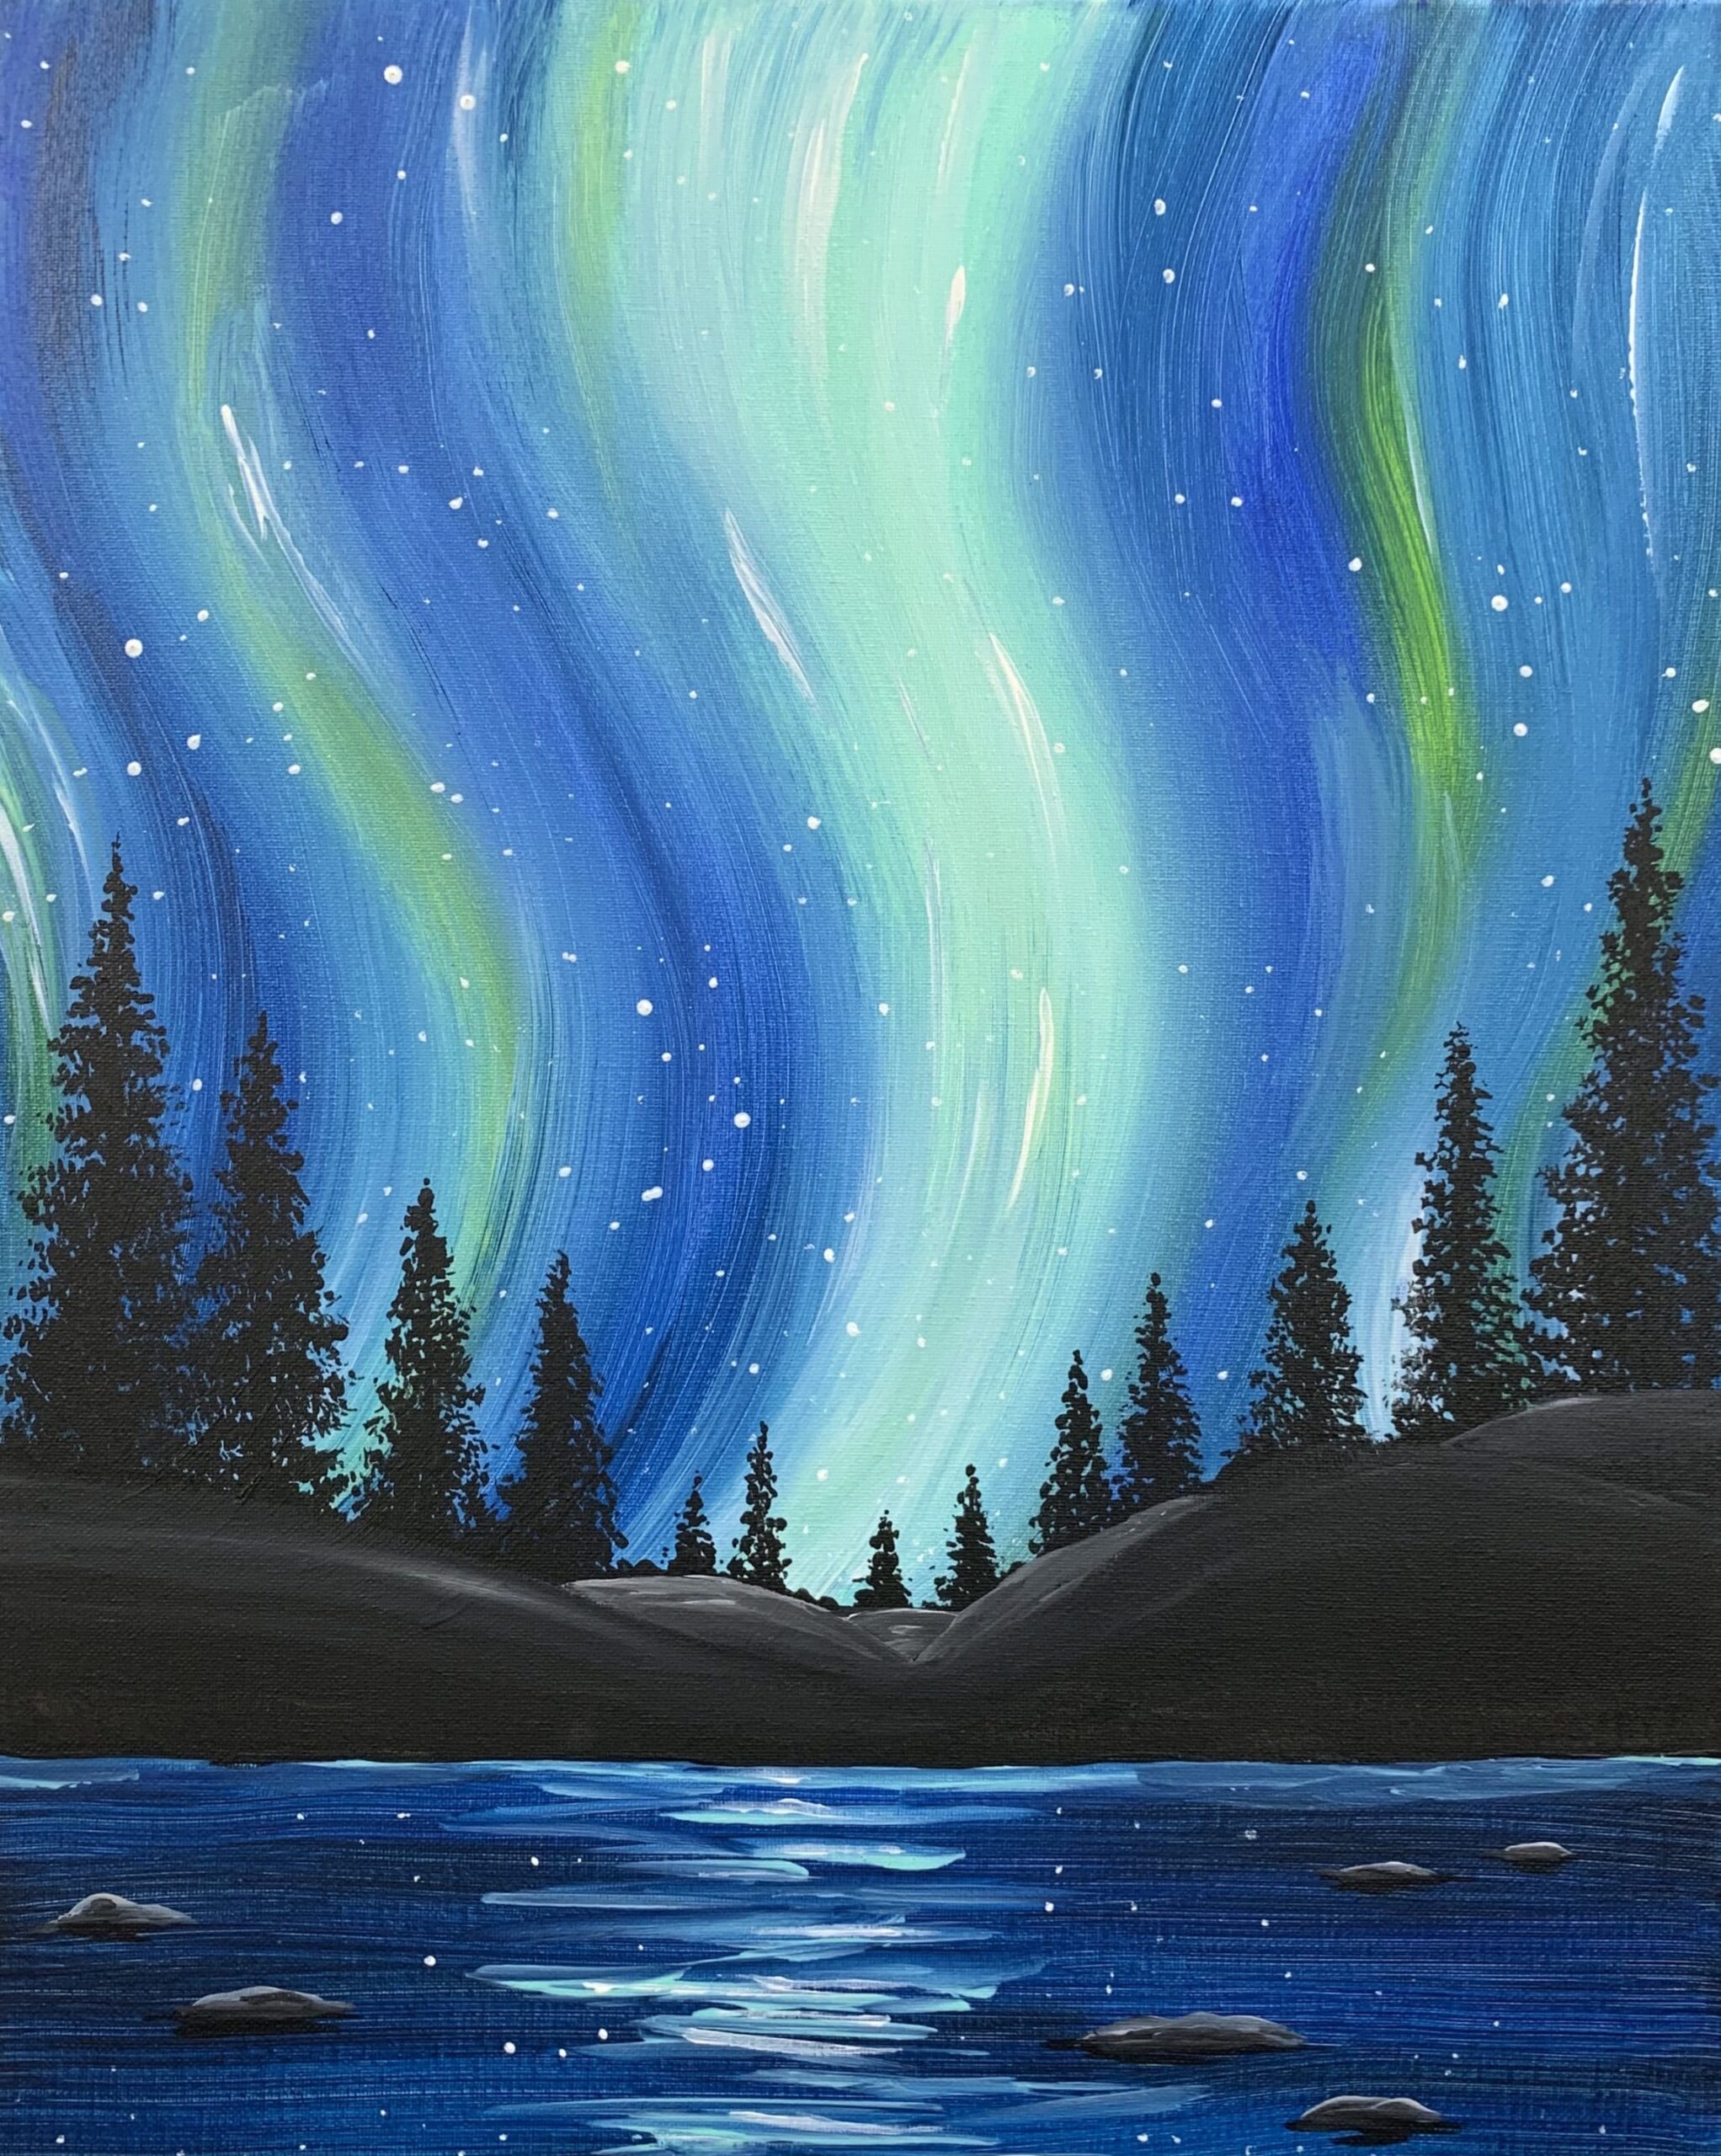 In-Studio Paint Night - Northern Lights Over Water